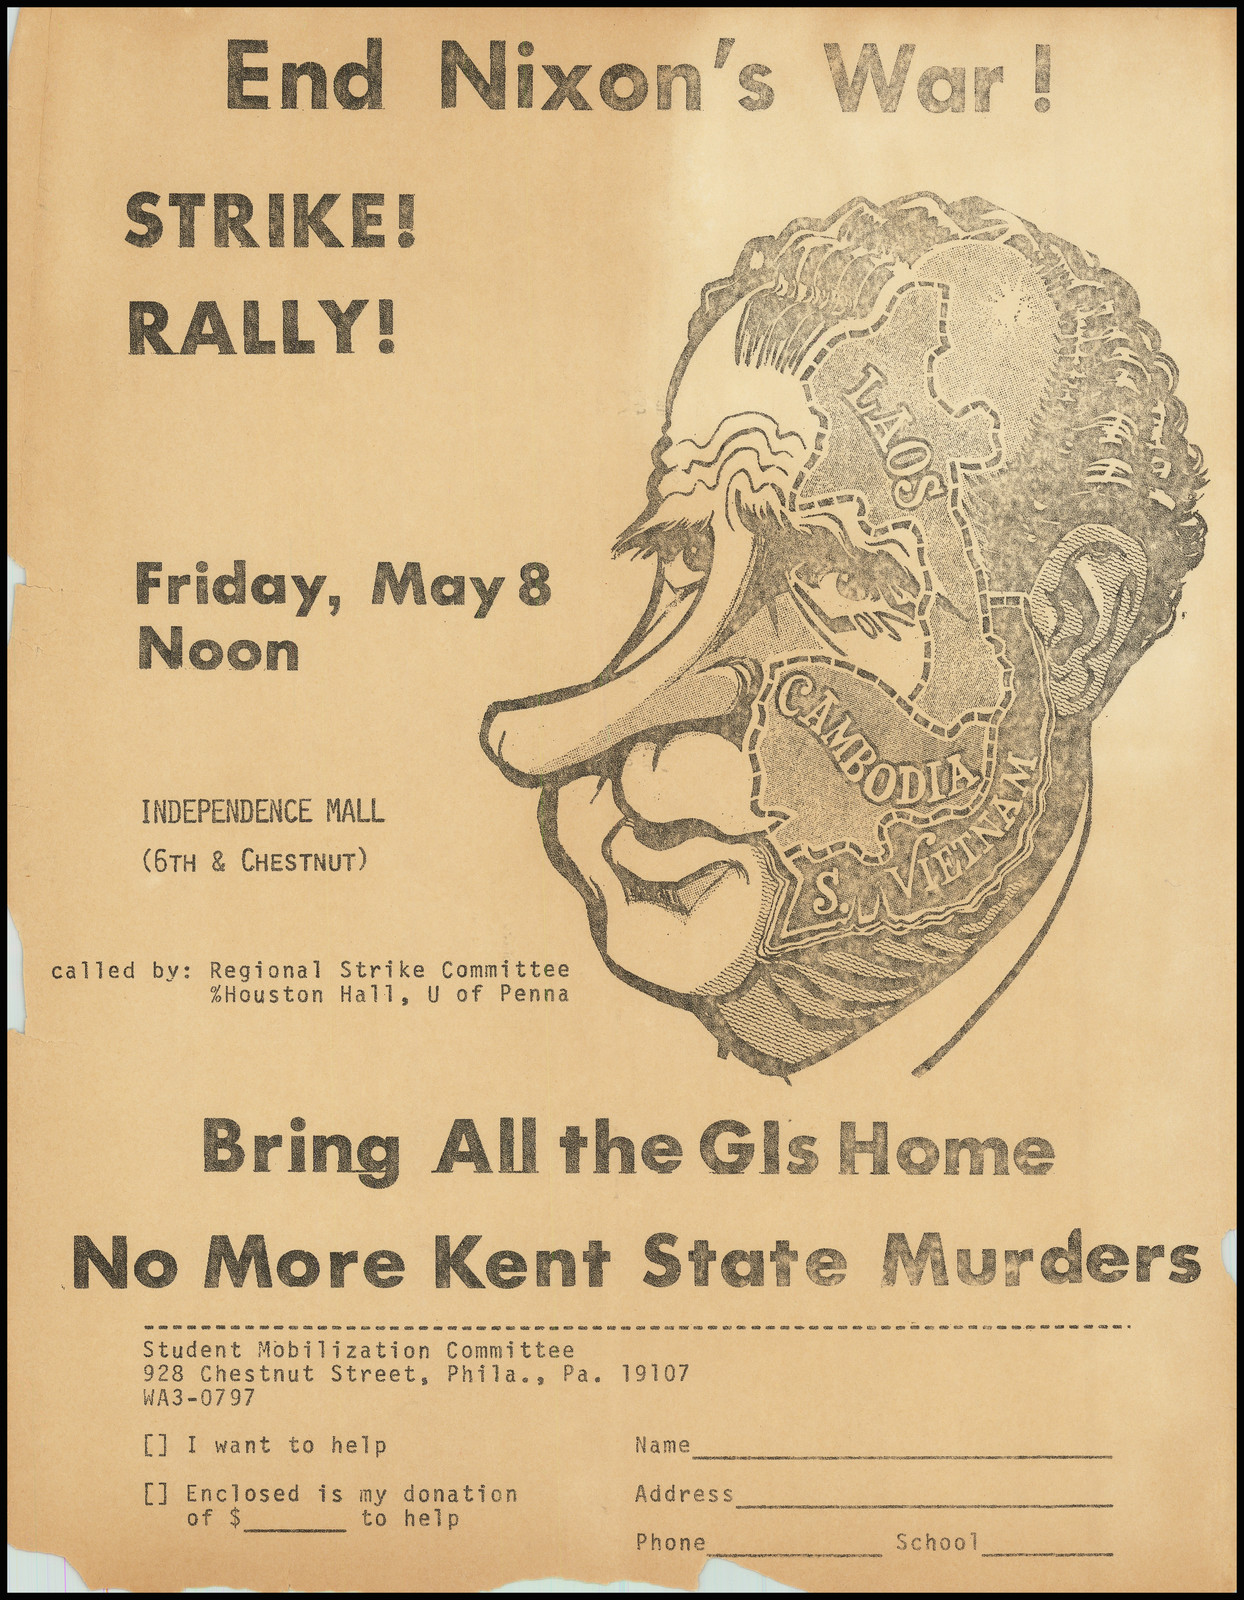 End Nixon's War! Strike! Rally! Friday, May 8 Noon